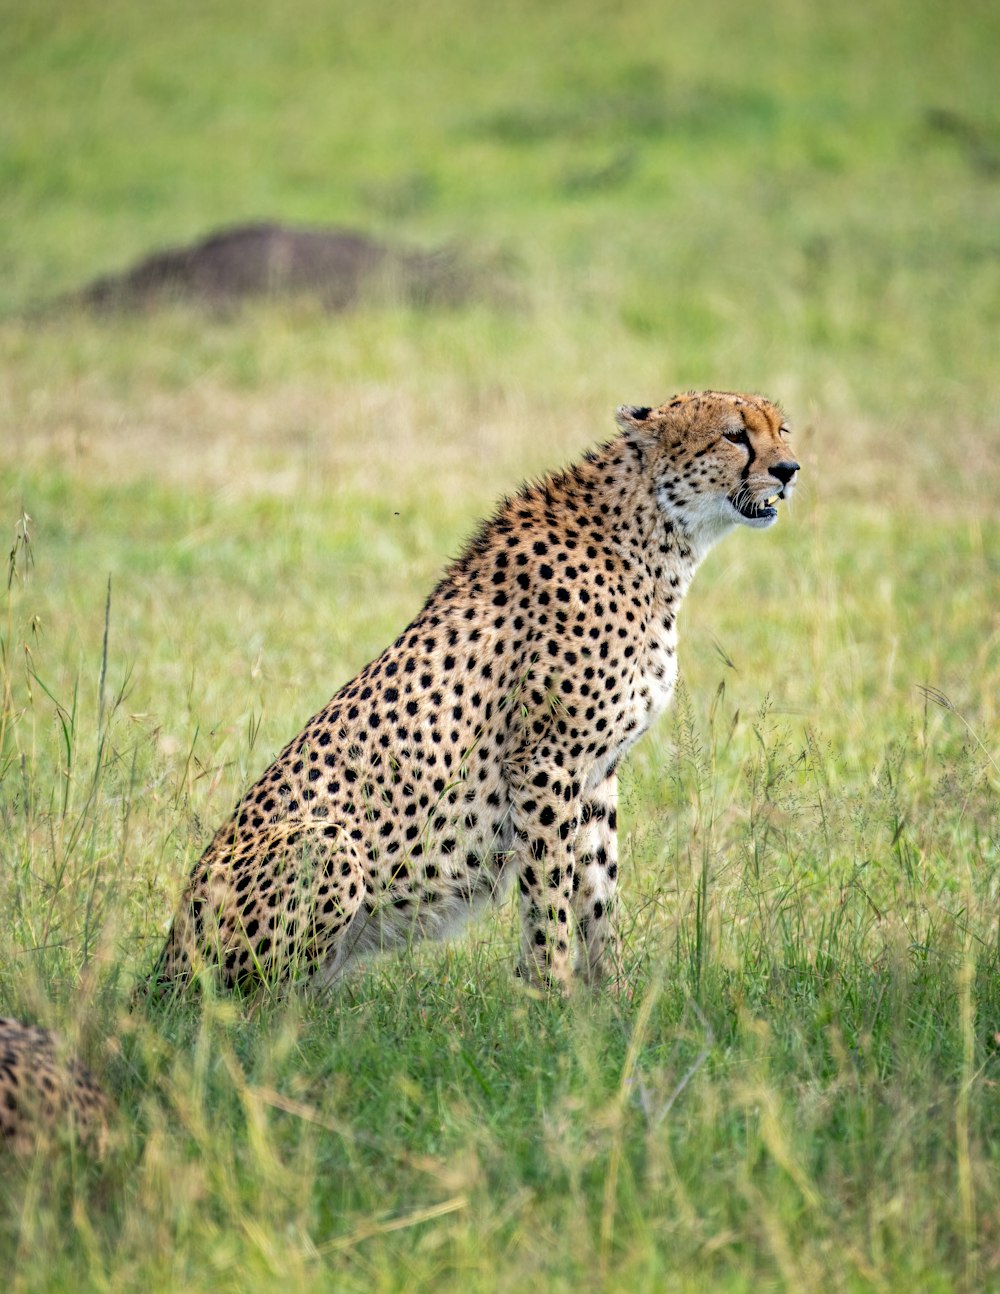 a cheetah sitting in a field of tall grass